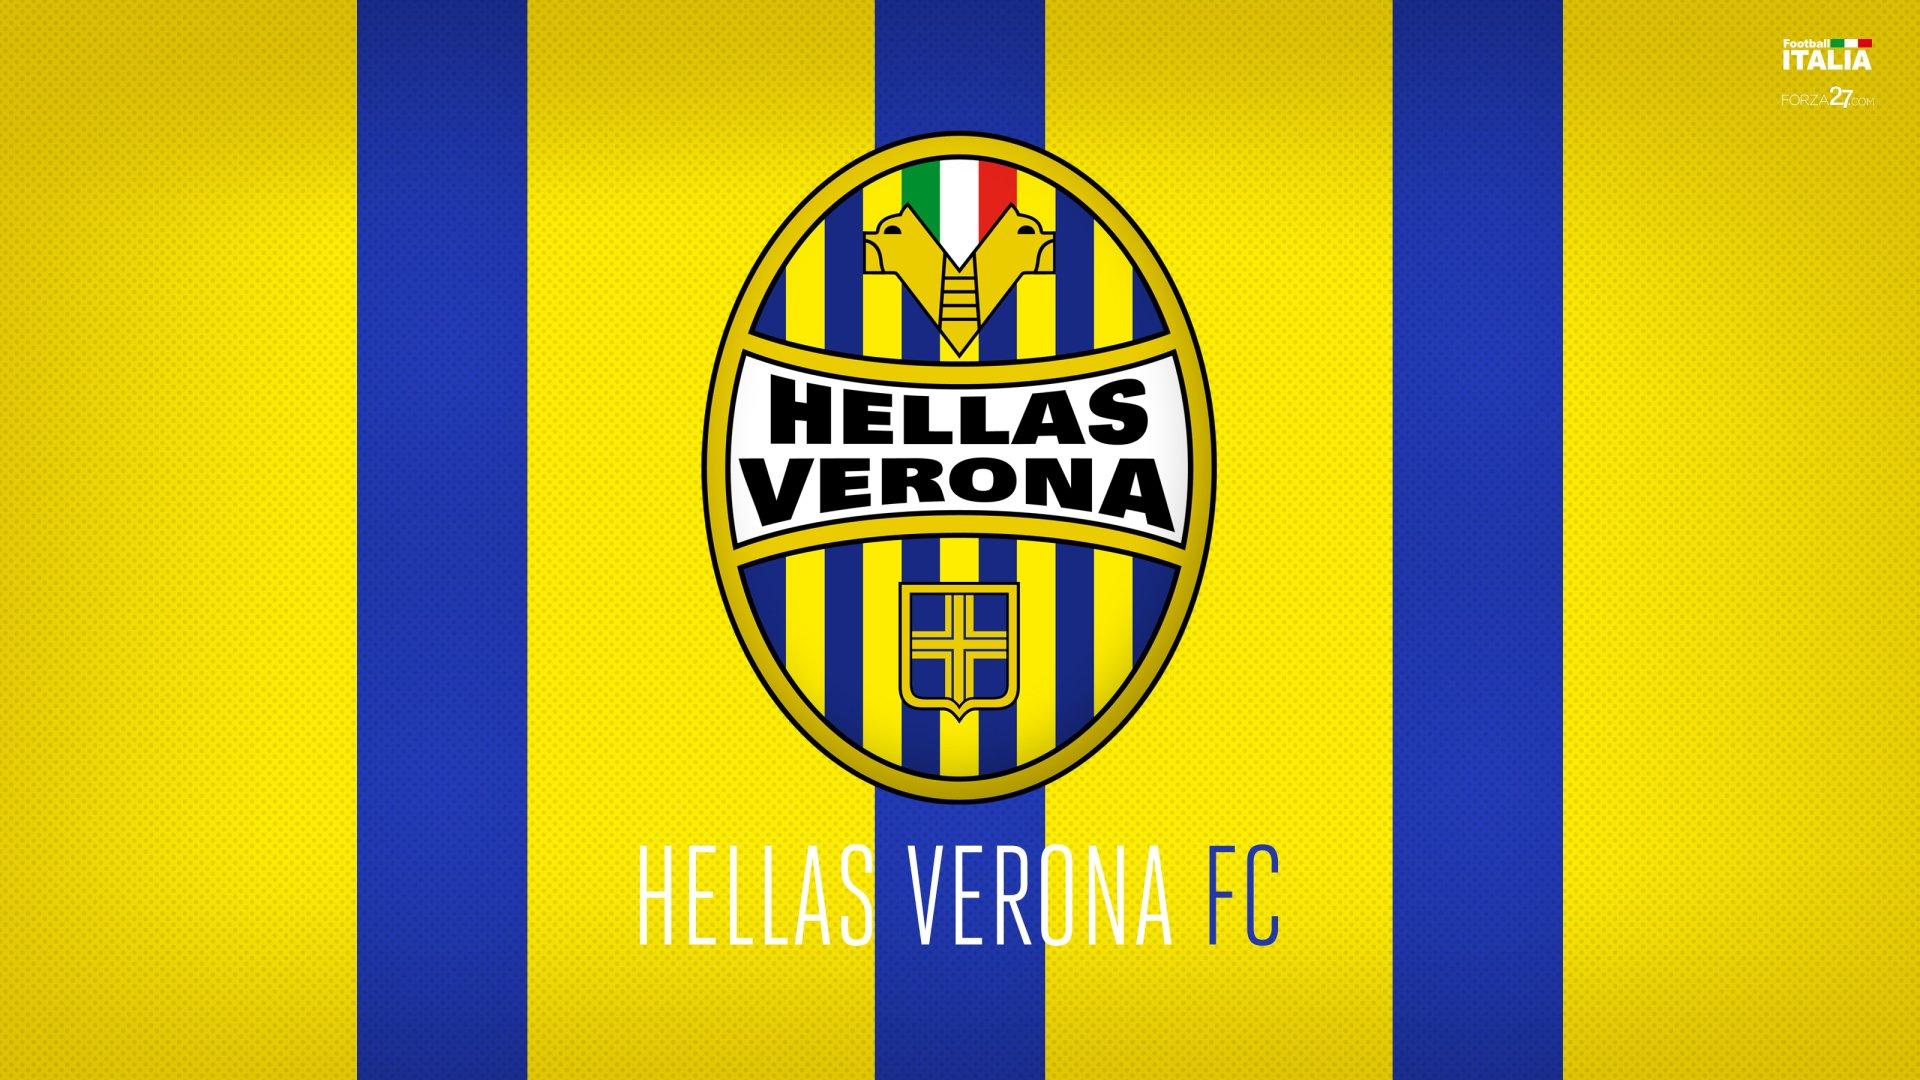 Hellas Verona F.C. HD Wallpaper and Background Image